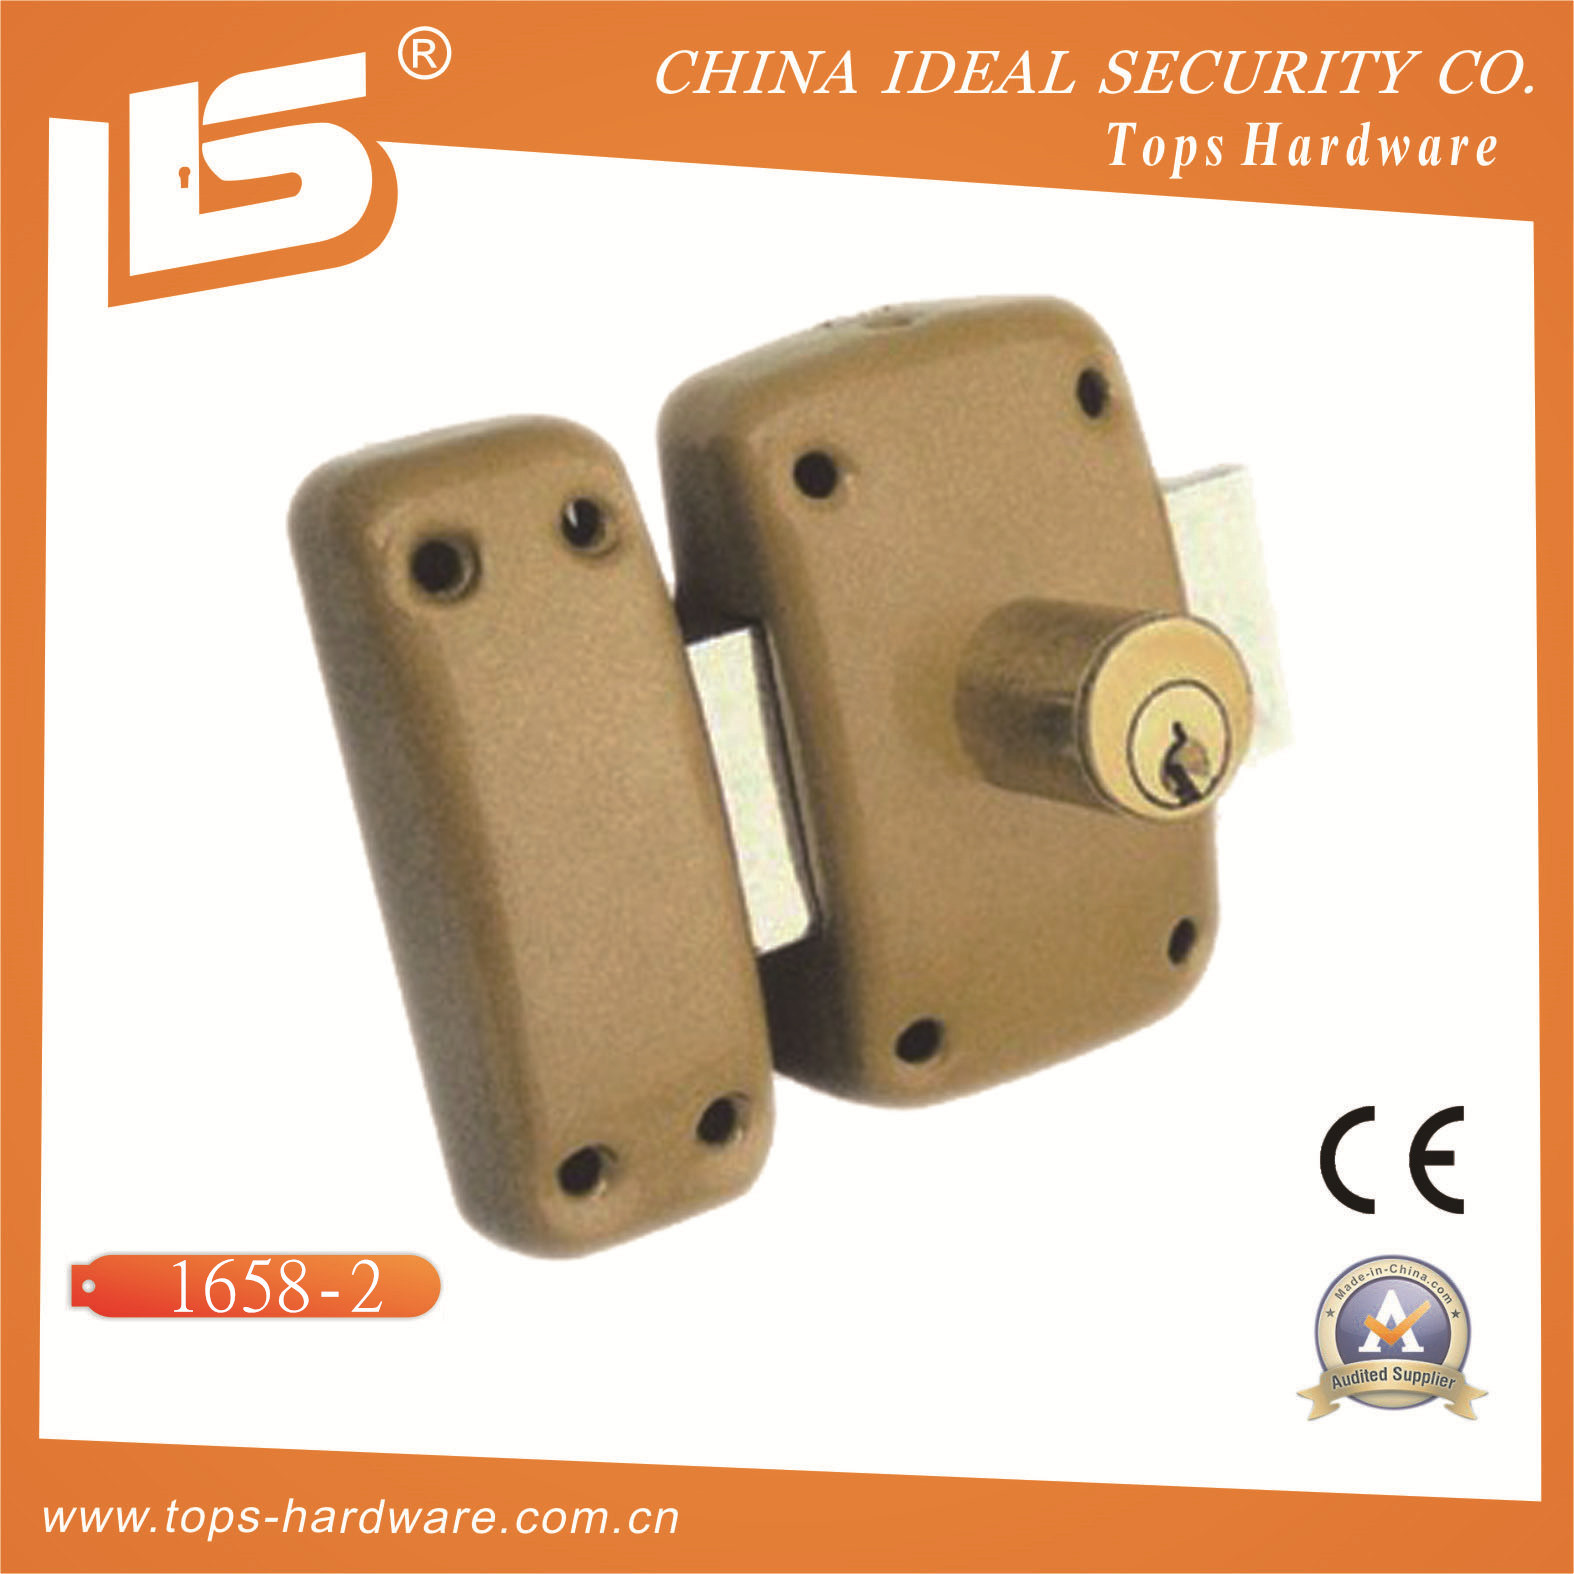 Security High Quality Door Rim Lock (1658-2)